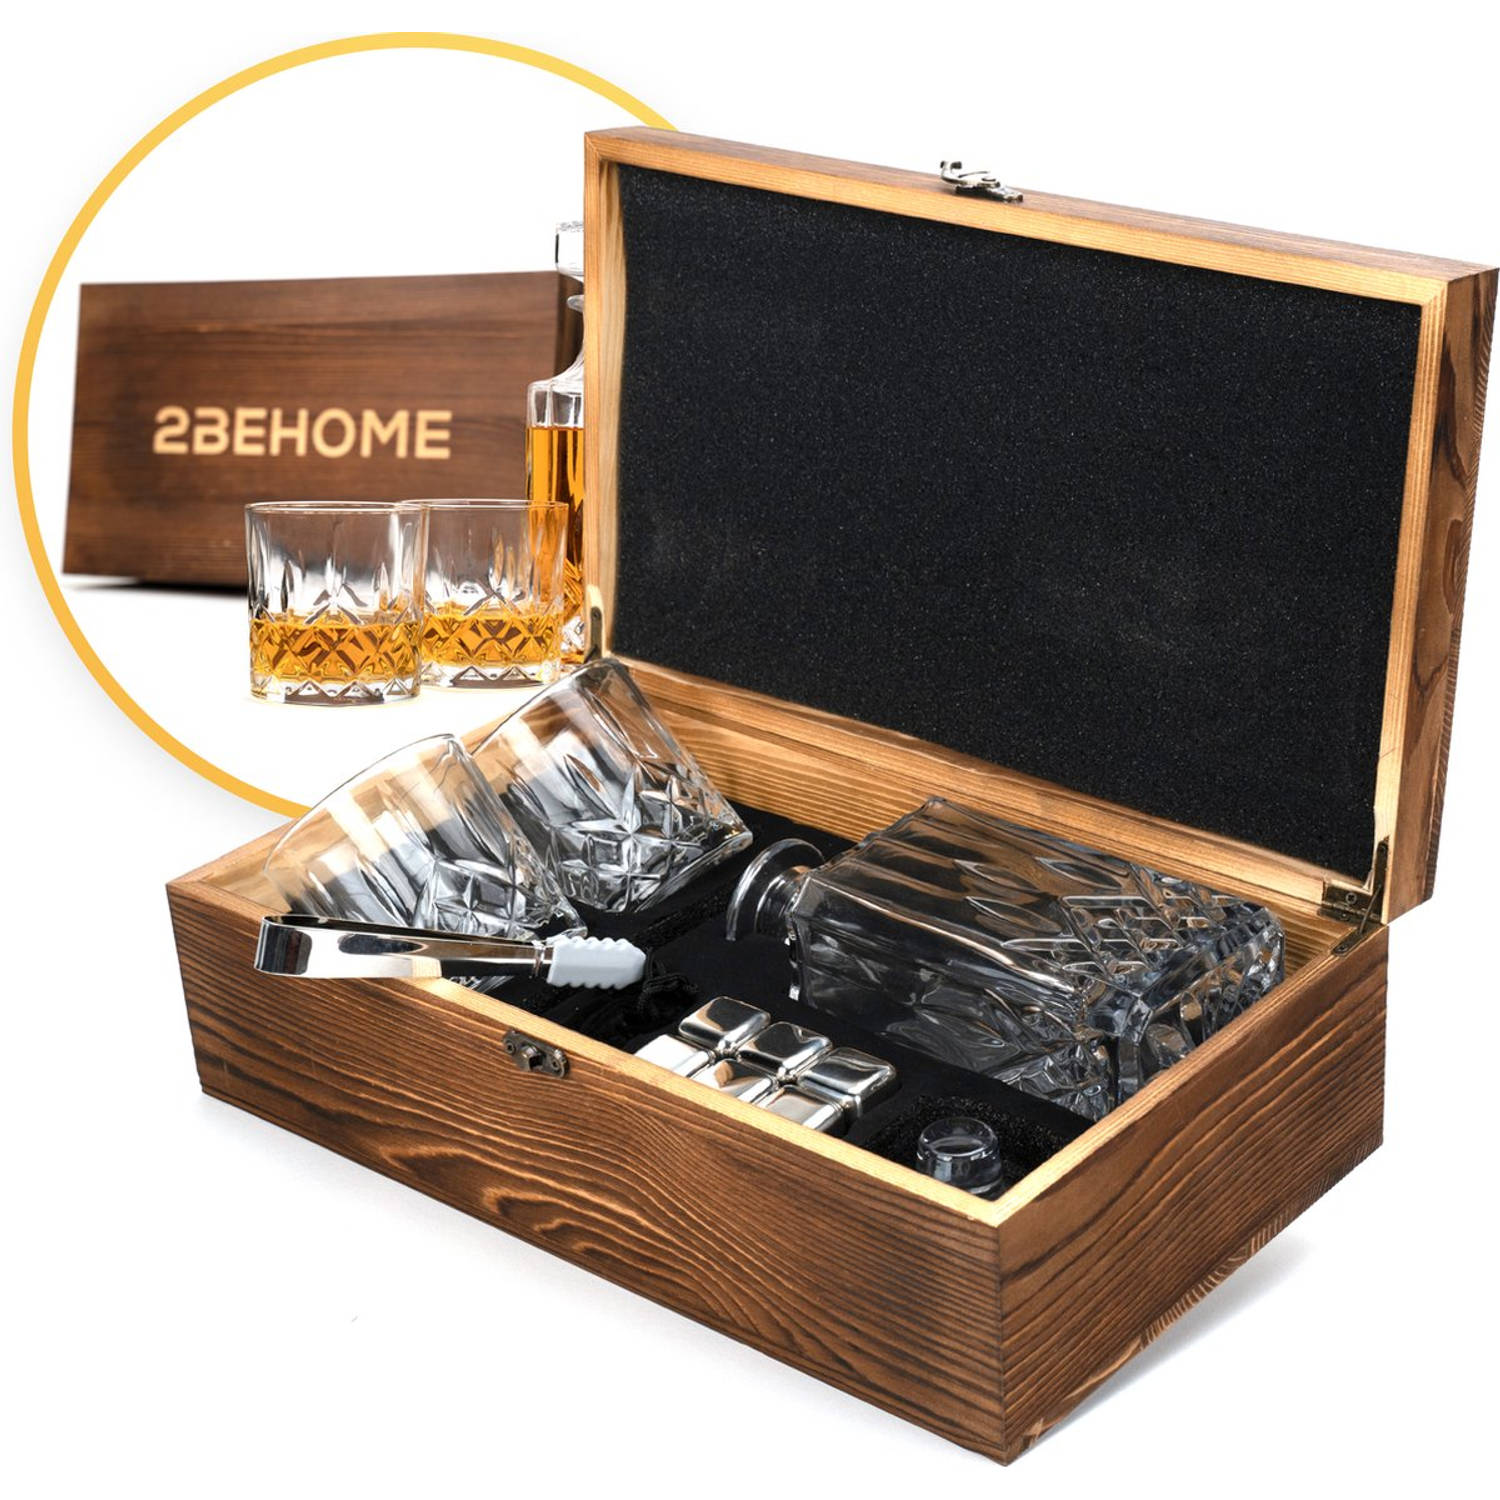 2behome Whiskey Set Met Decanteer Karaf Incl. 2 Whiskey Glazen En 6 Whiskey Stones En Luxe Geschenkd